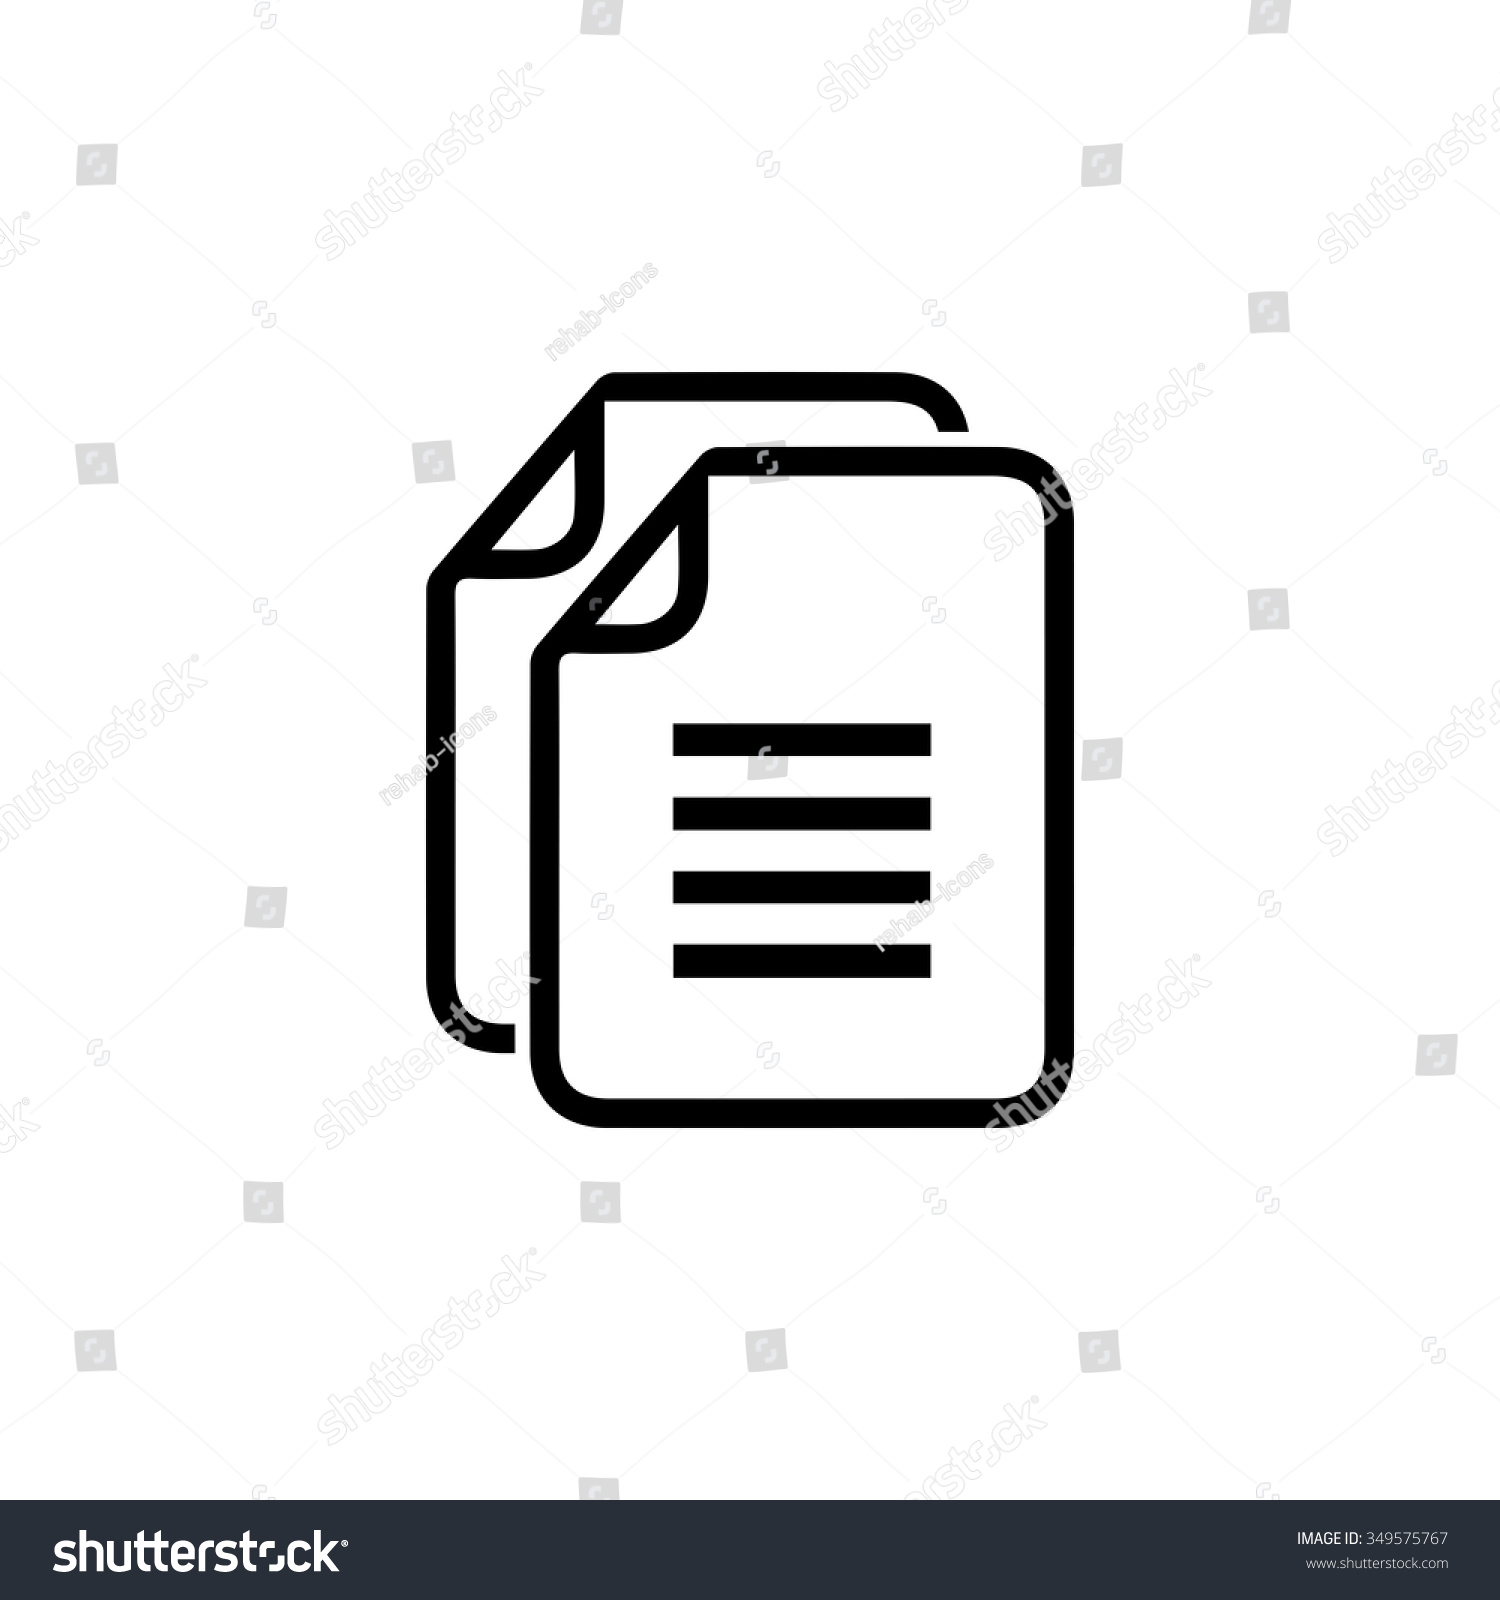 Copy file icon. Duplicate document symbol. #349575767